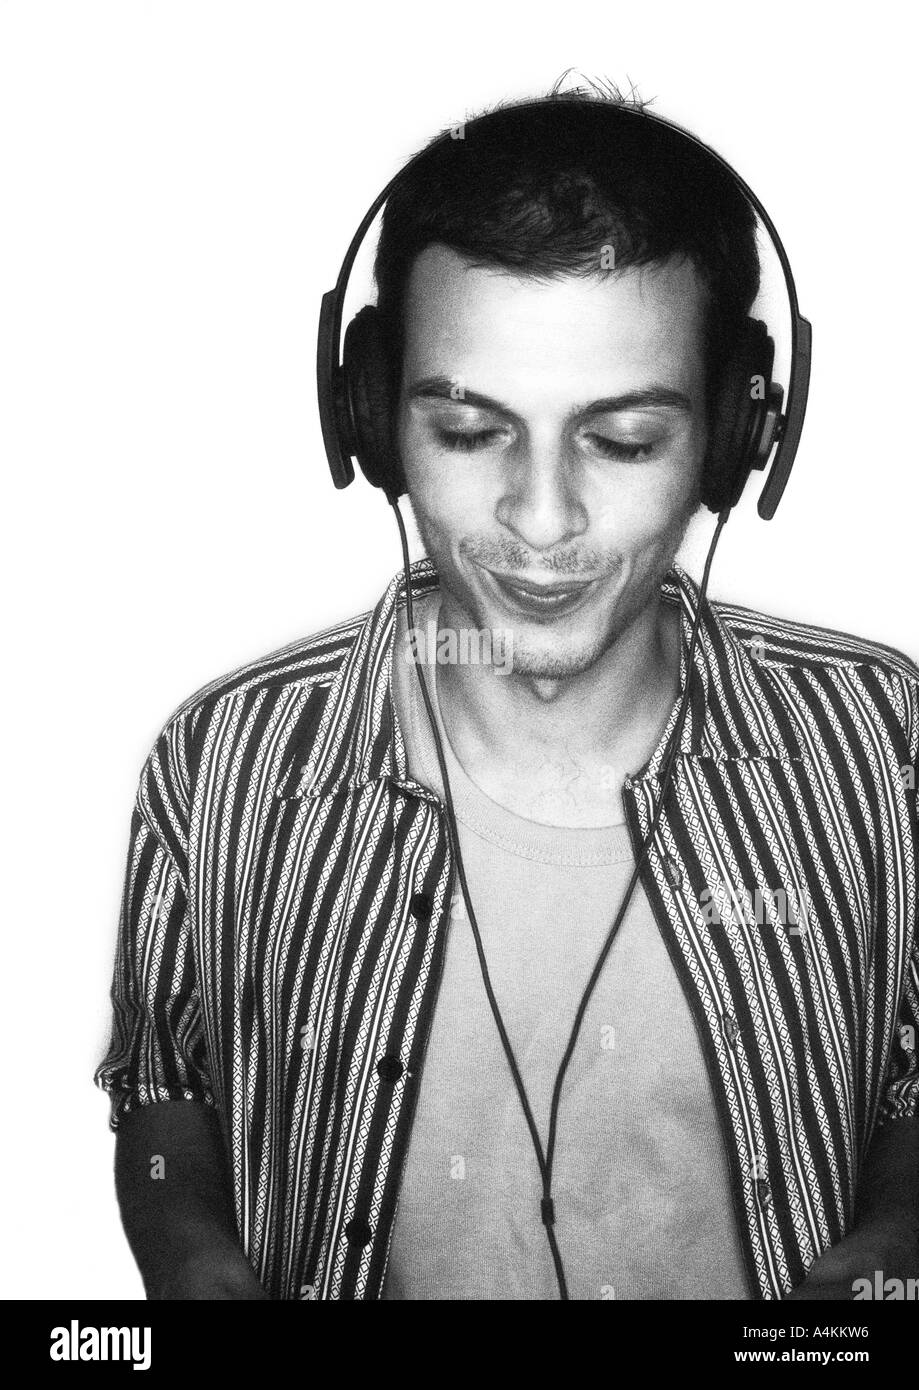 Man listening to headphones, smiling, portrait Stock Photo